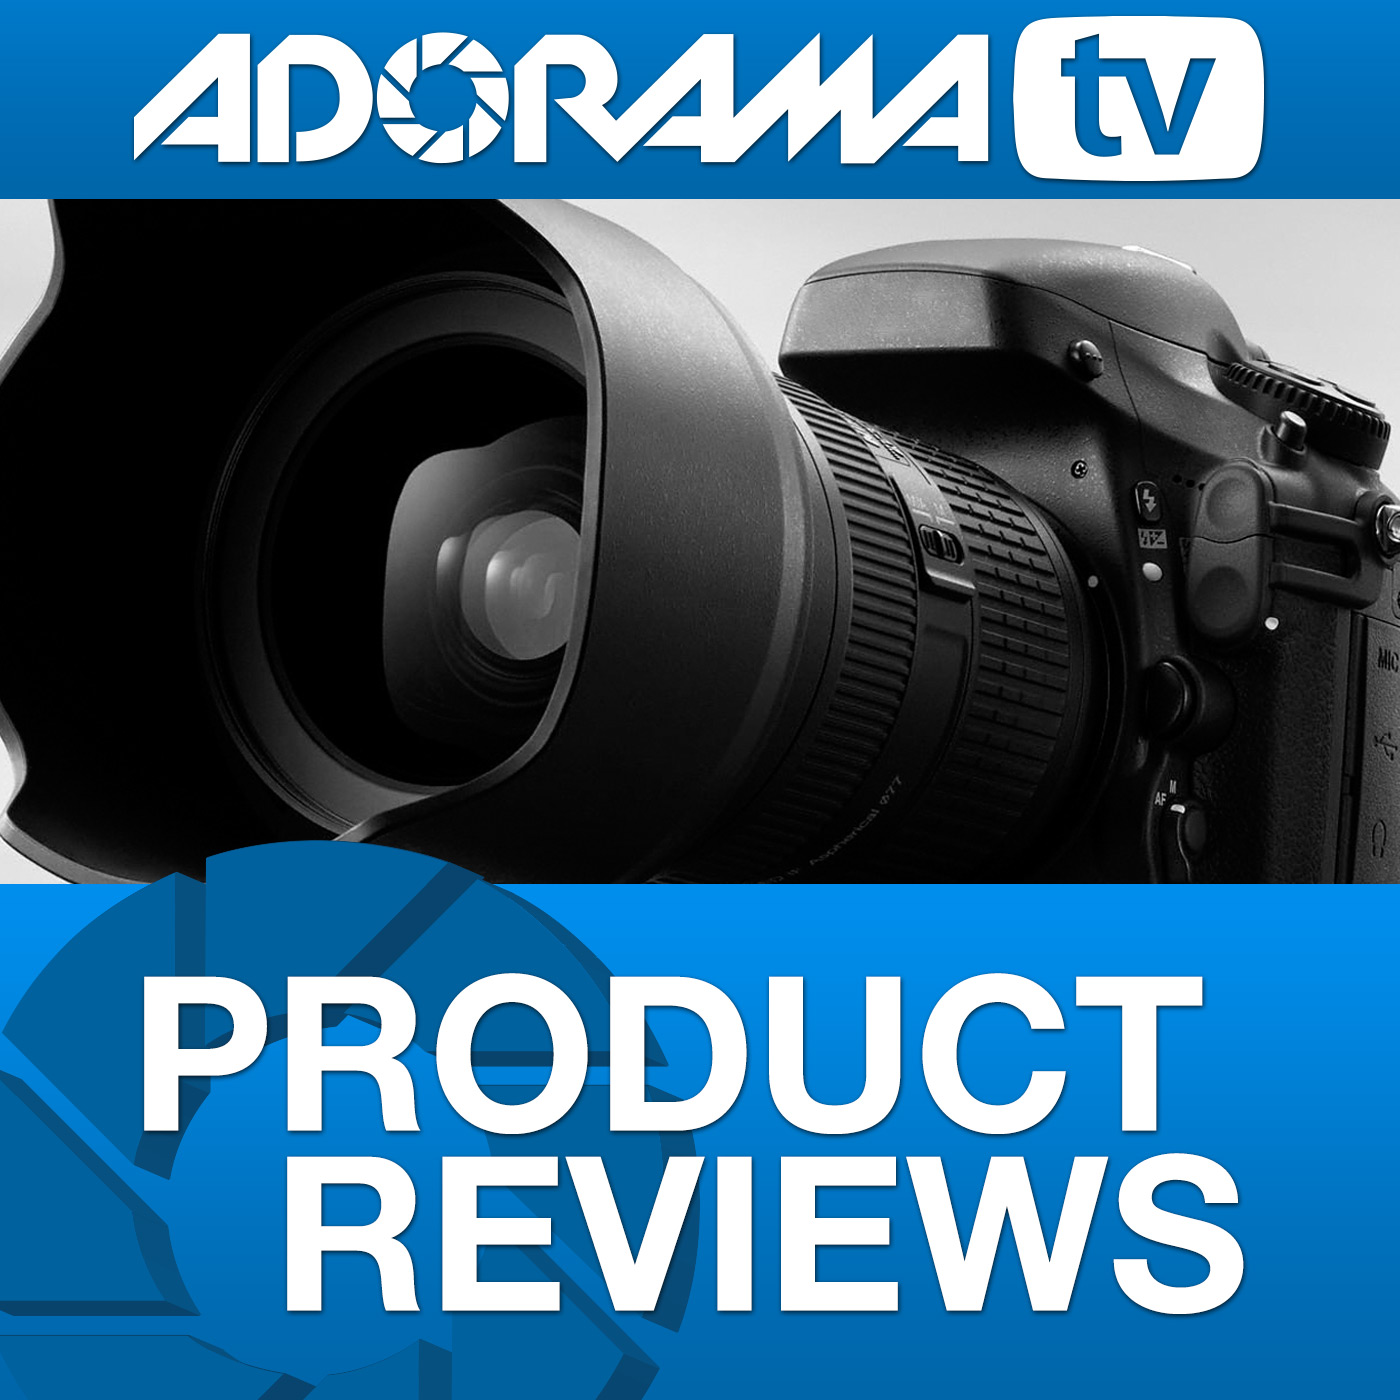 Leica T Digital Camera : Product Overview : Adorama TV.